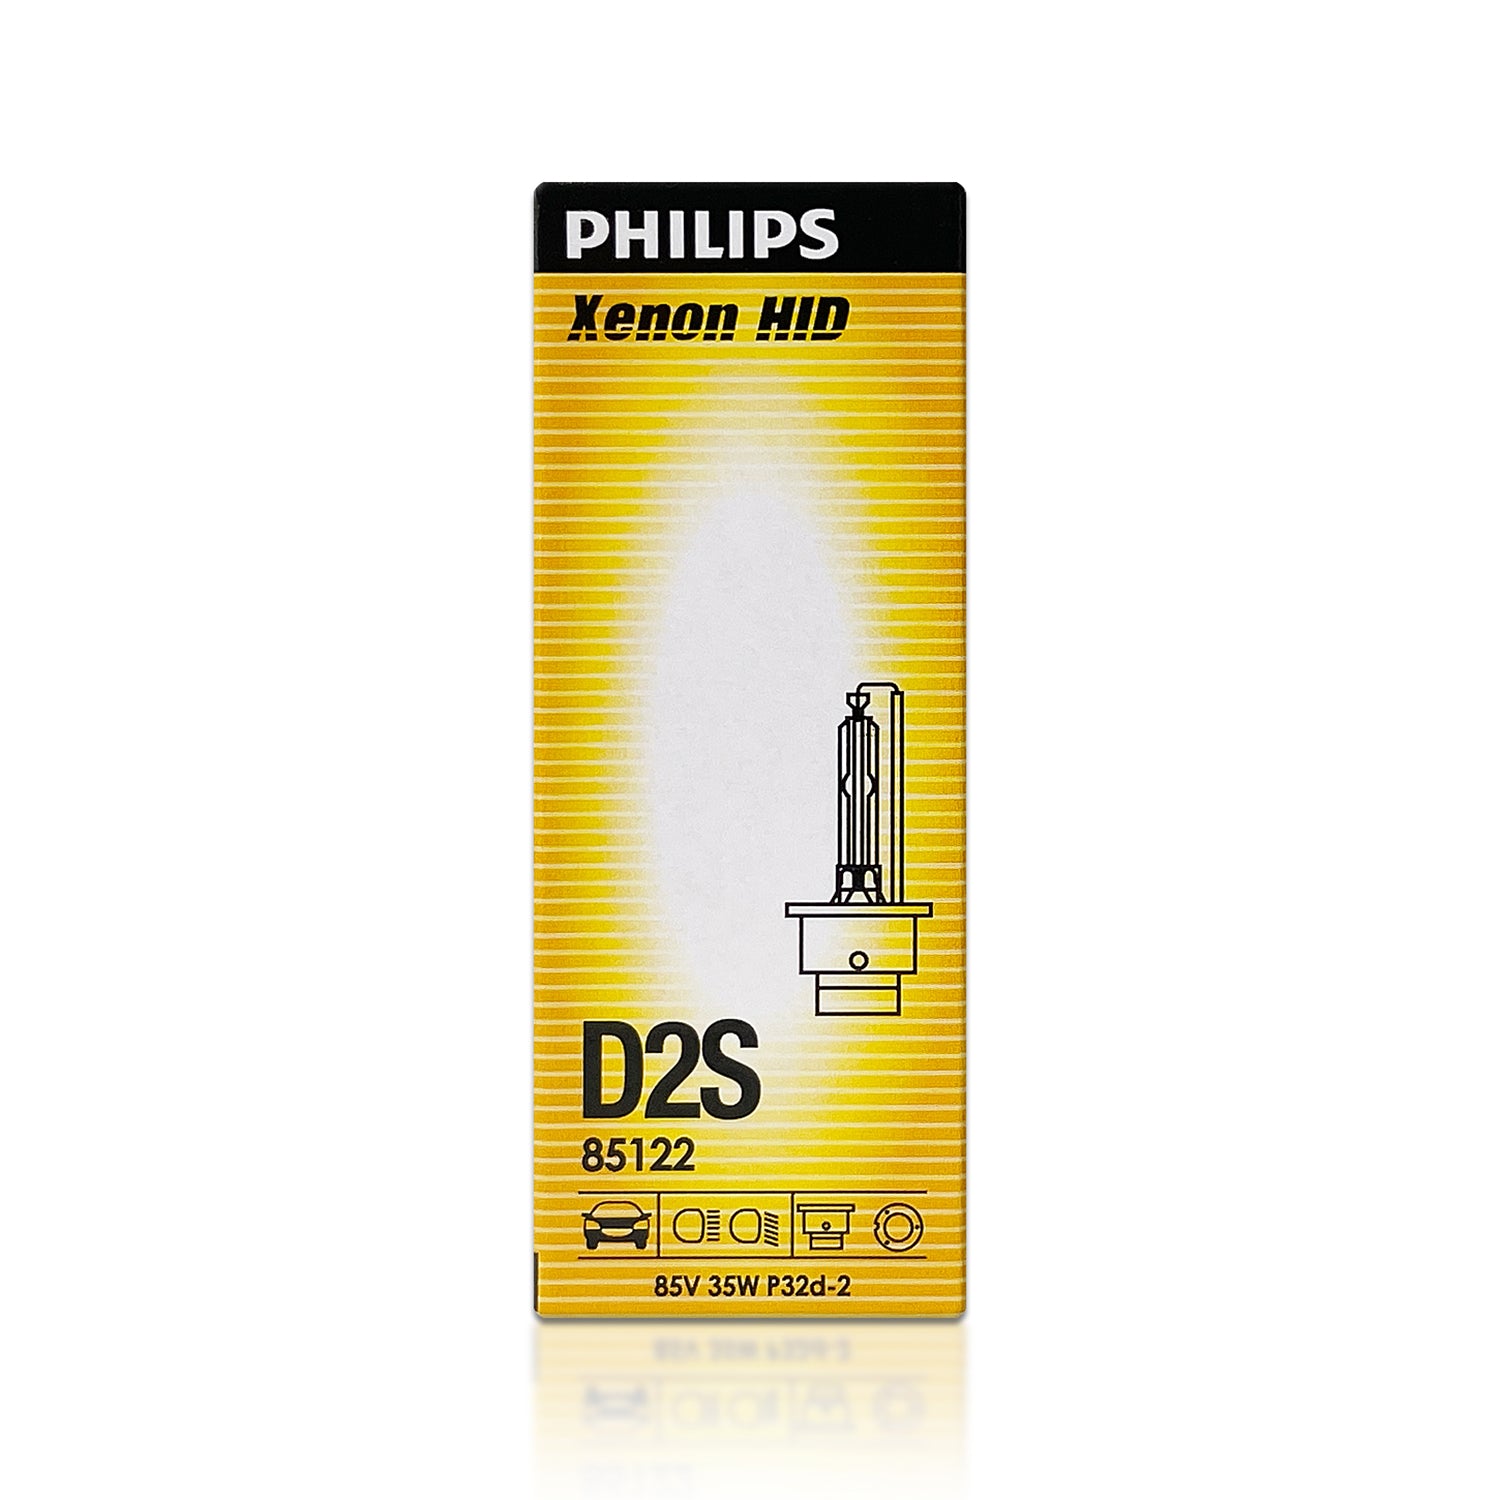 Philips D2S Xenon HID Headlight Bulb (Pack of 1)